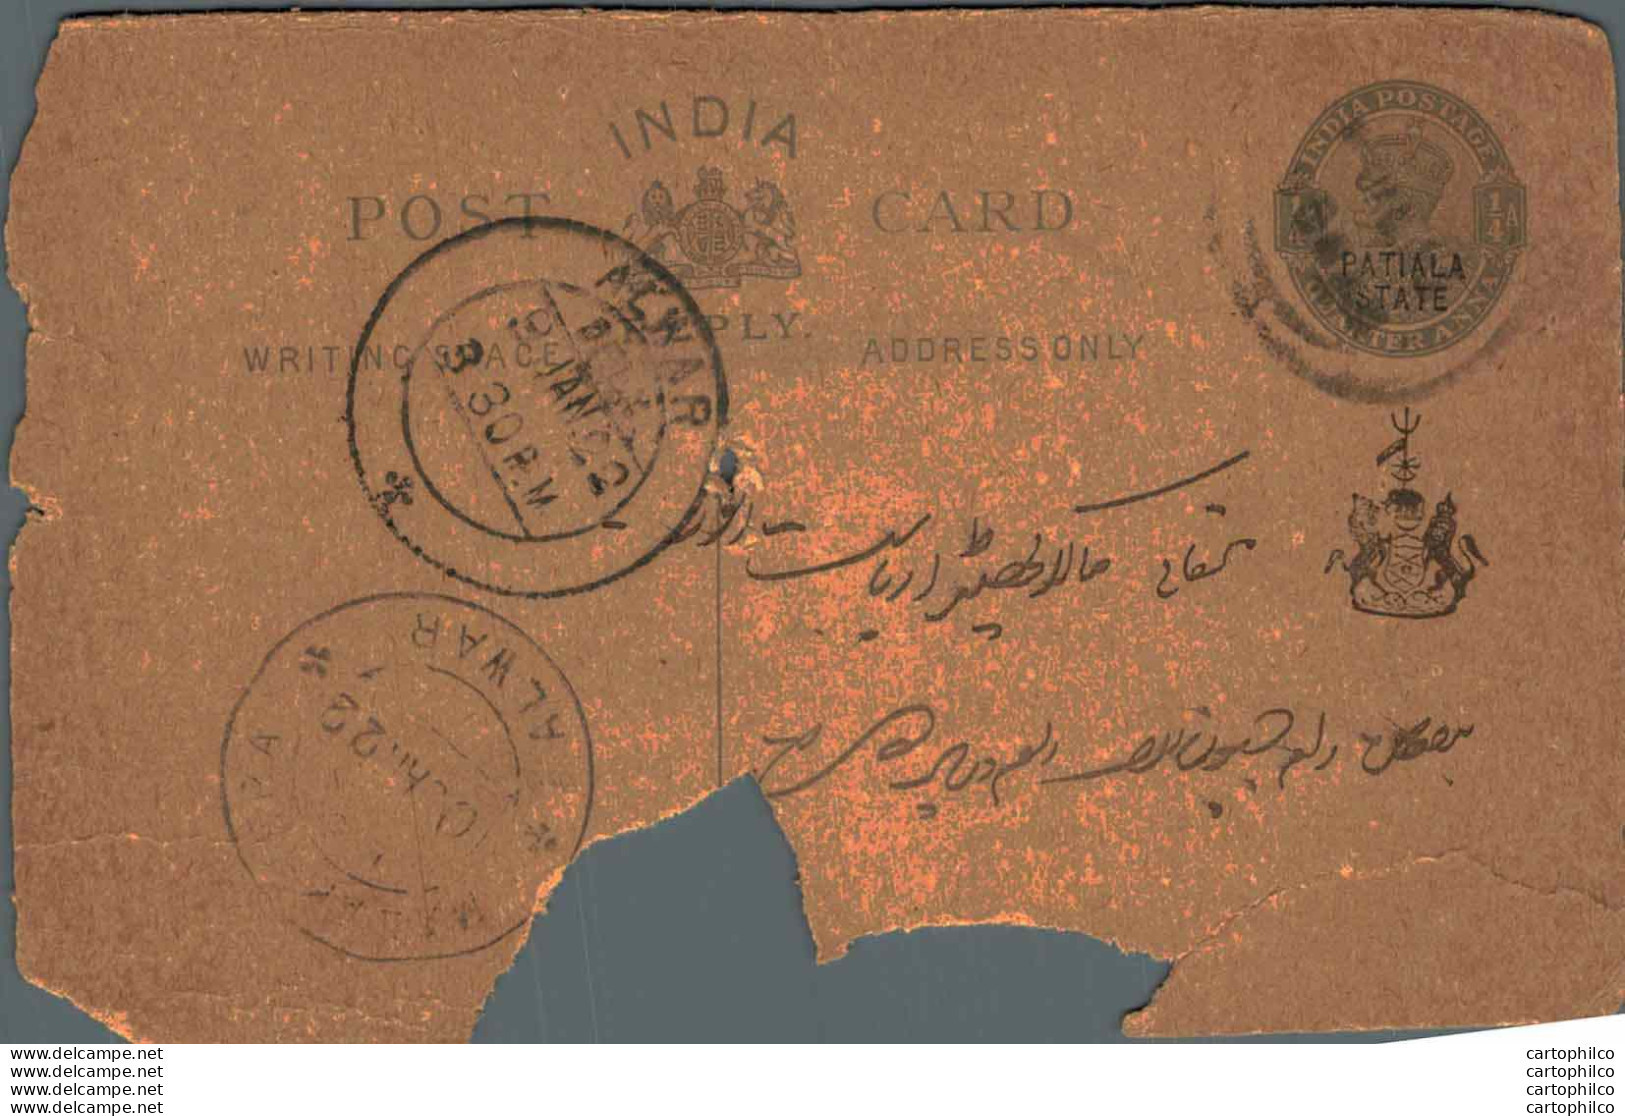 India Postal Stationery Patiala State 1/4A Alwar Cds - Patiala